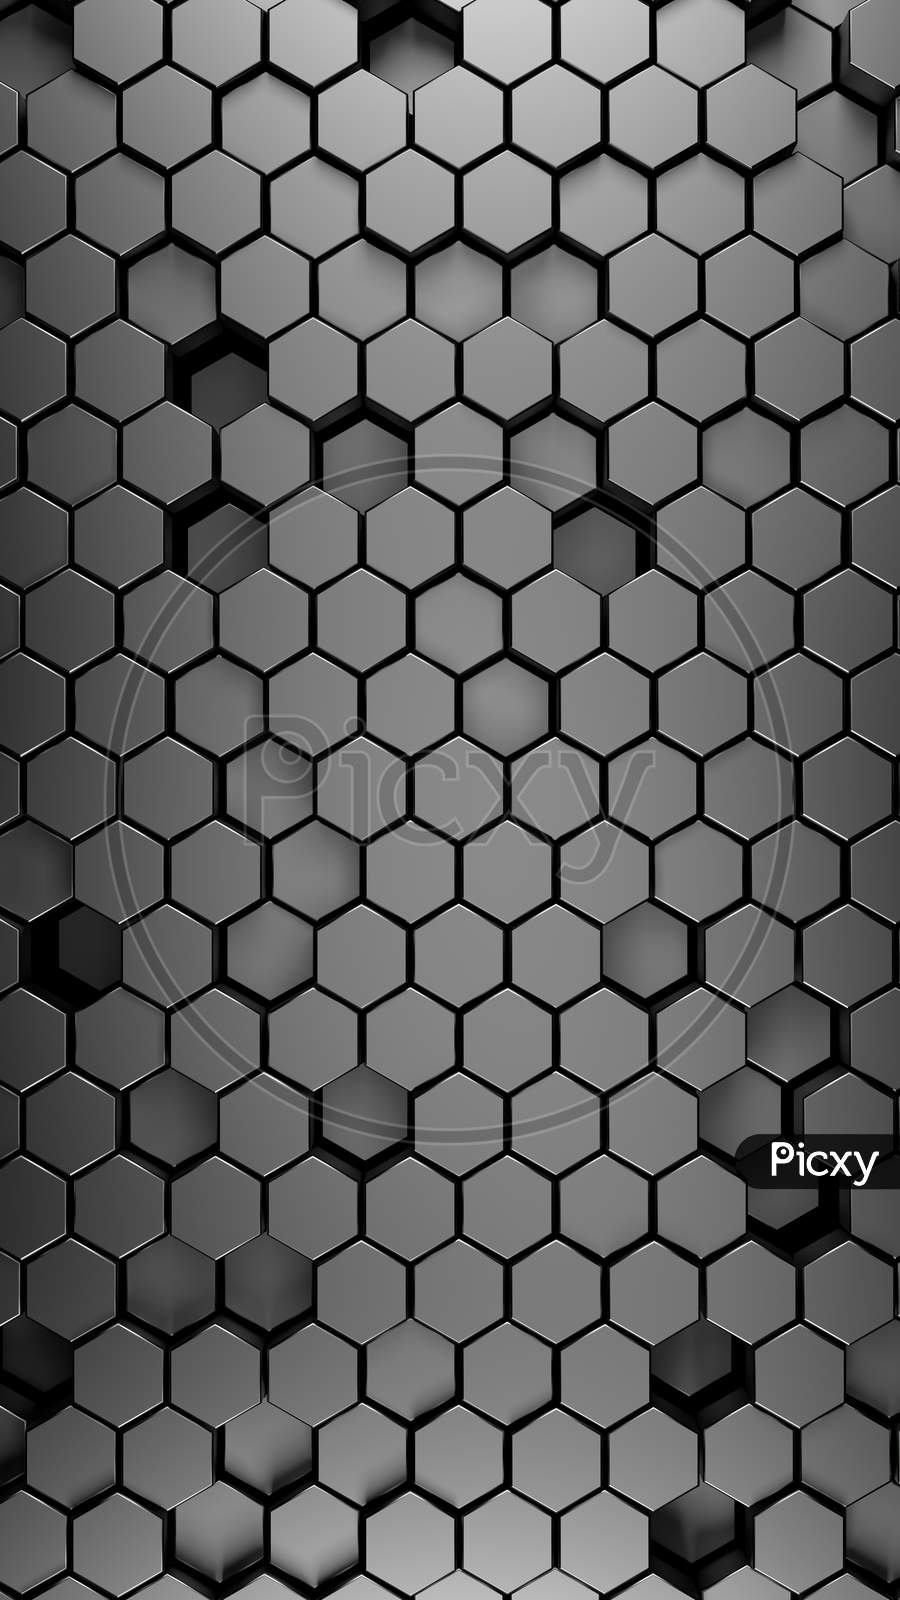 Steel Polished Black Metallic Hexagonal Abstract 3D Background, Metal Wall With Hexagonal Pattern 3D Rendering. Vertical Portrait Orientation